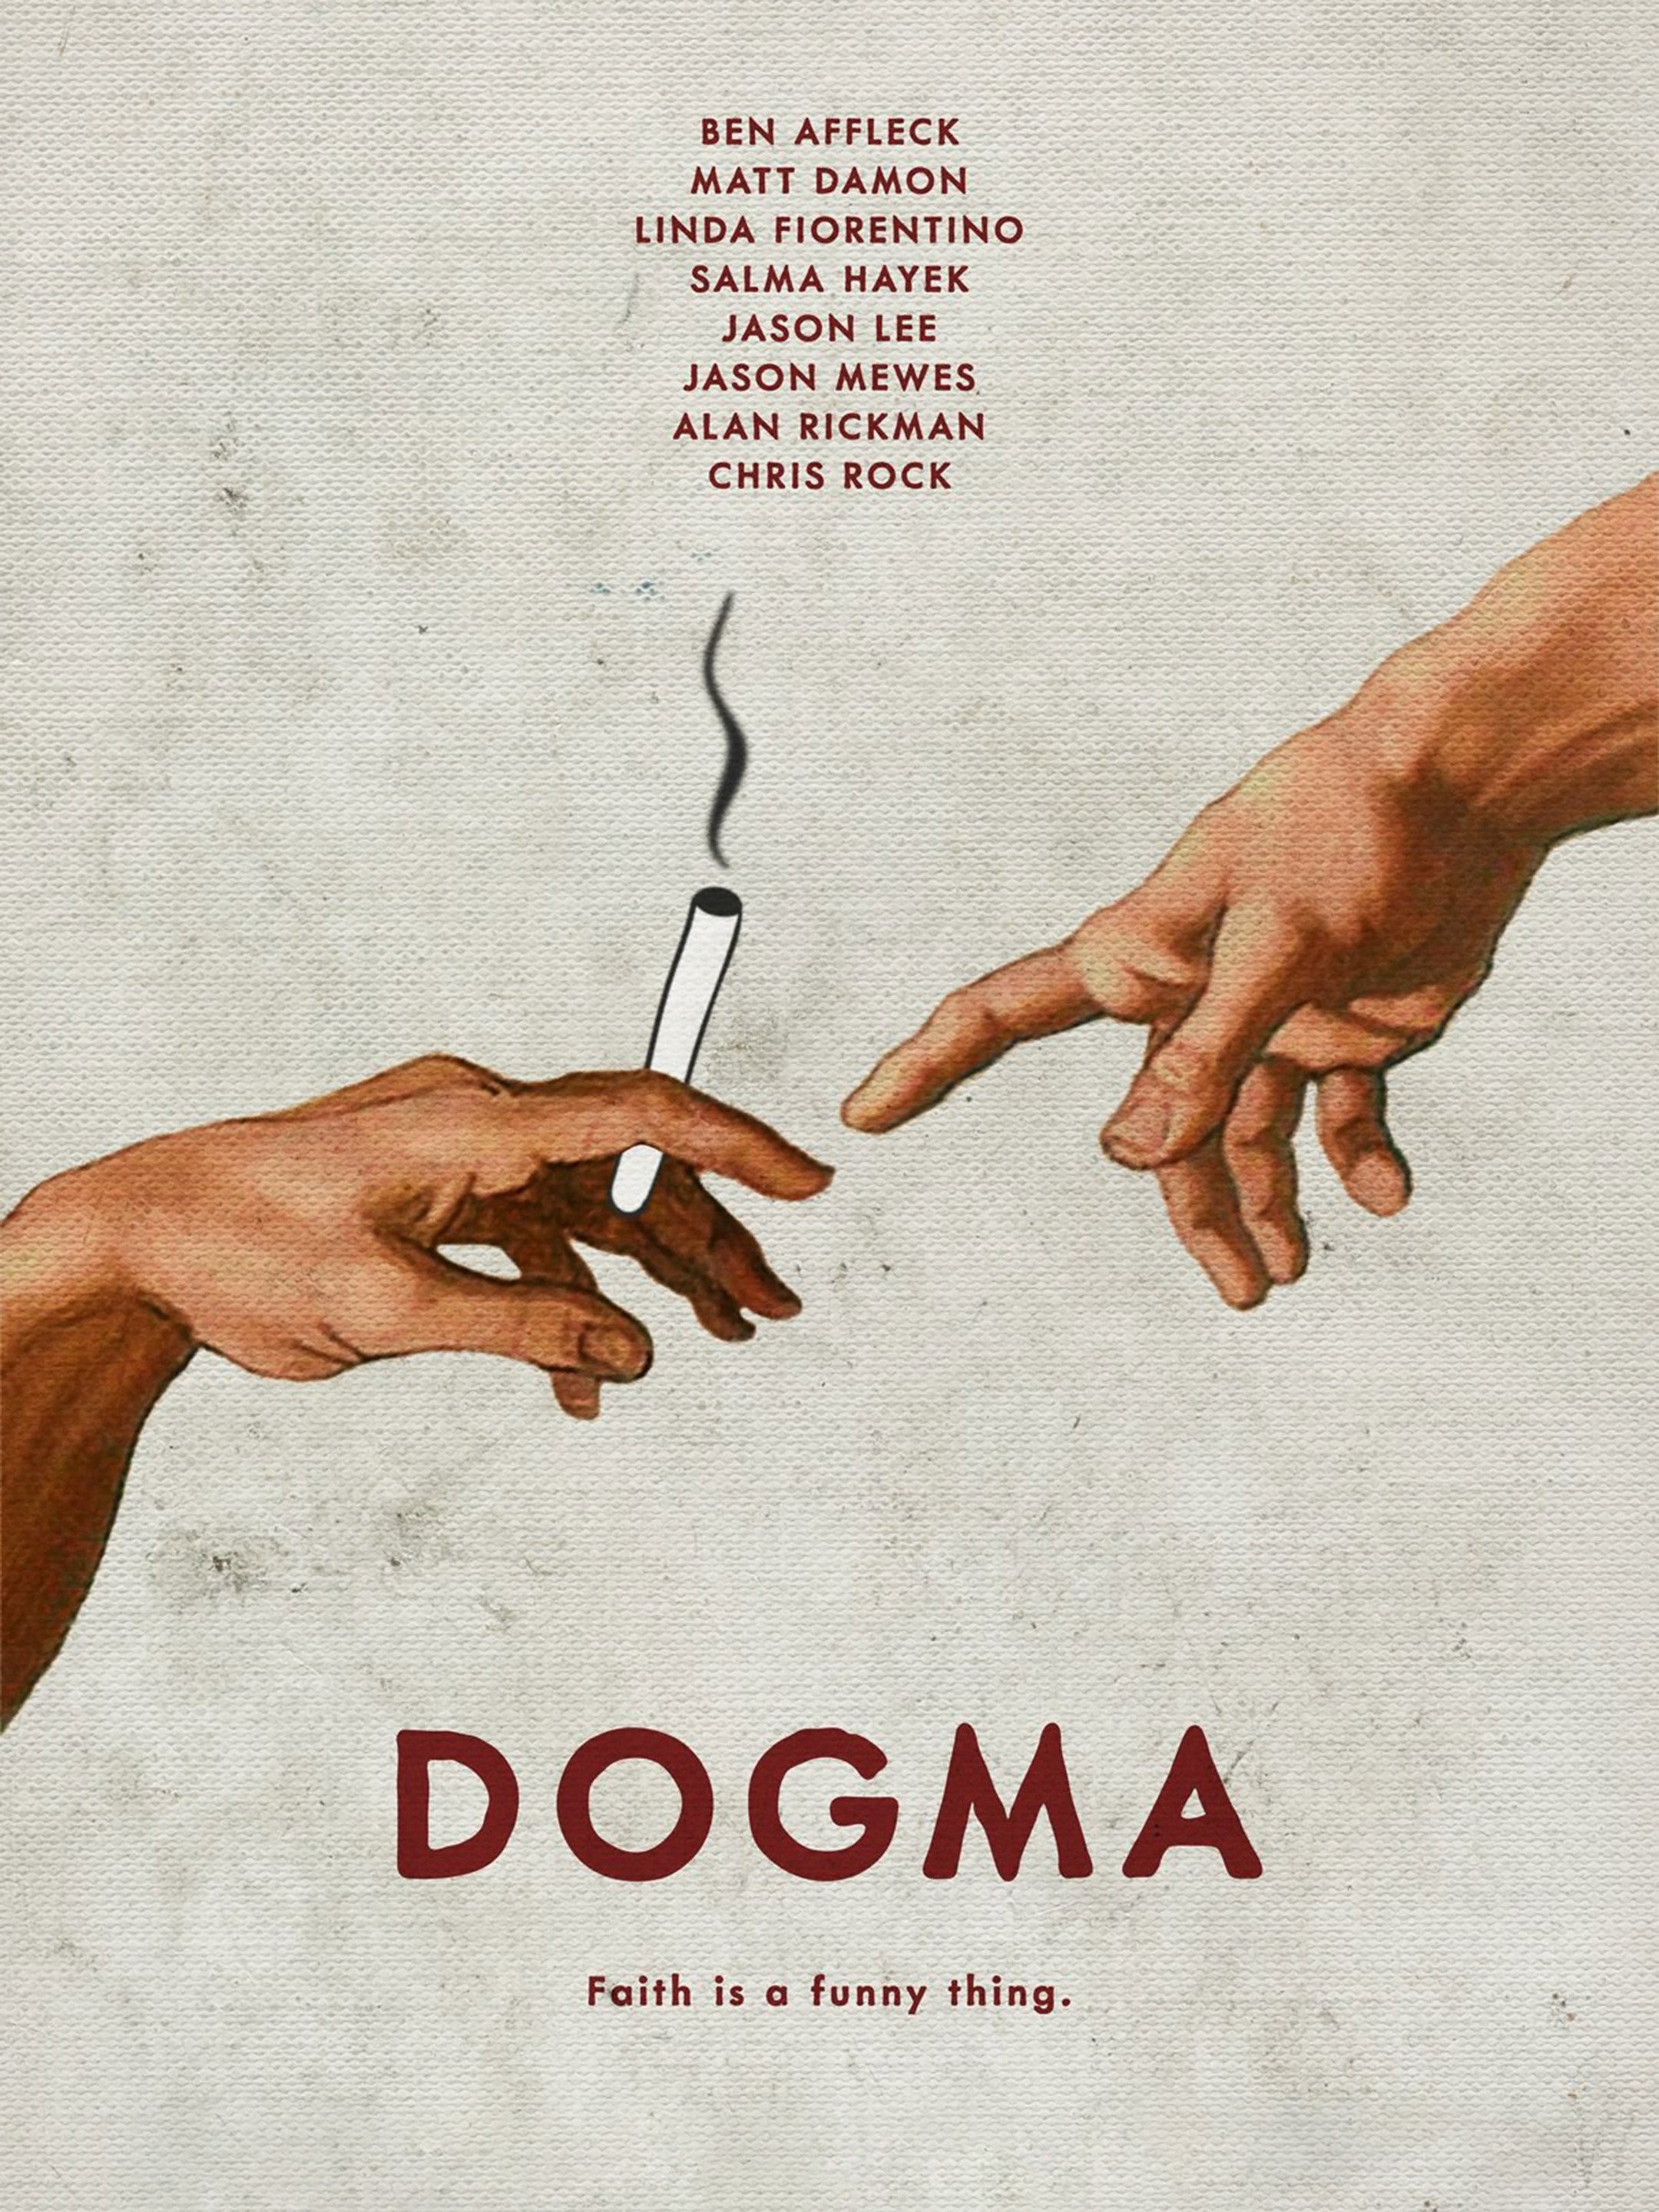 Dogma (film) - Wikipedia